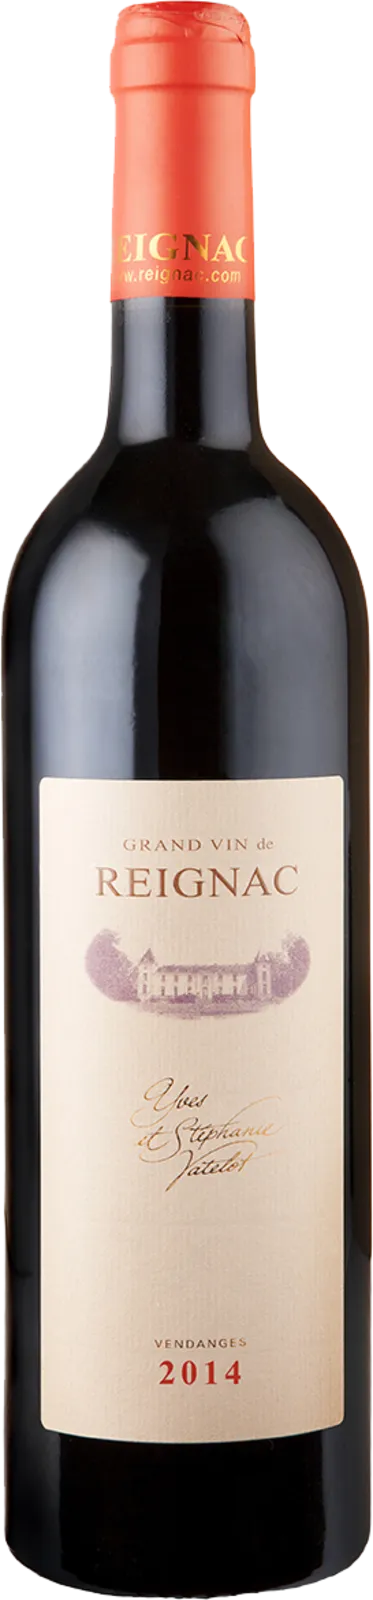 Grand Vin de REIGNAC 2014